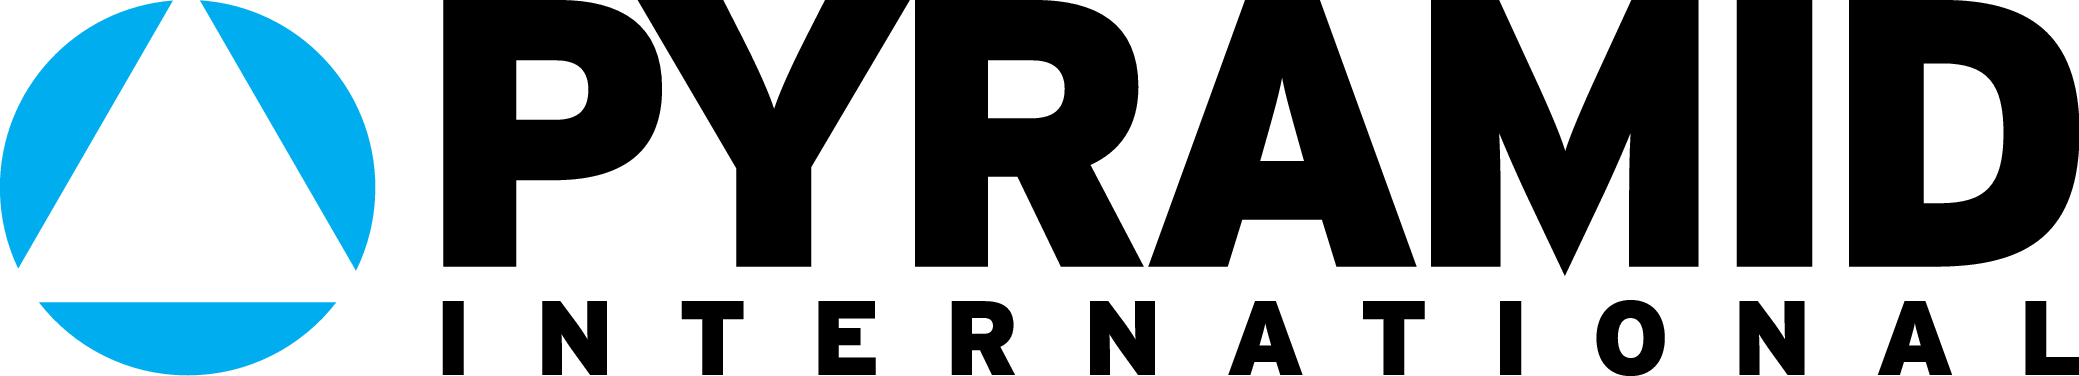 pyramid-international-logo